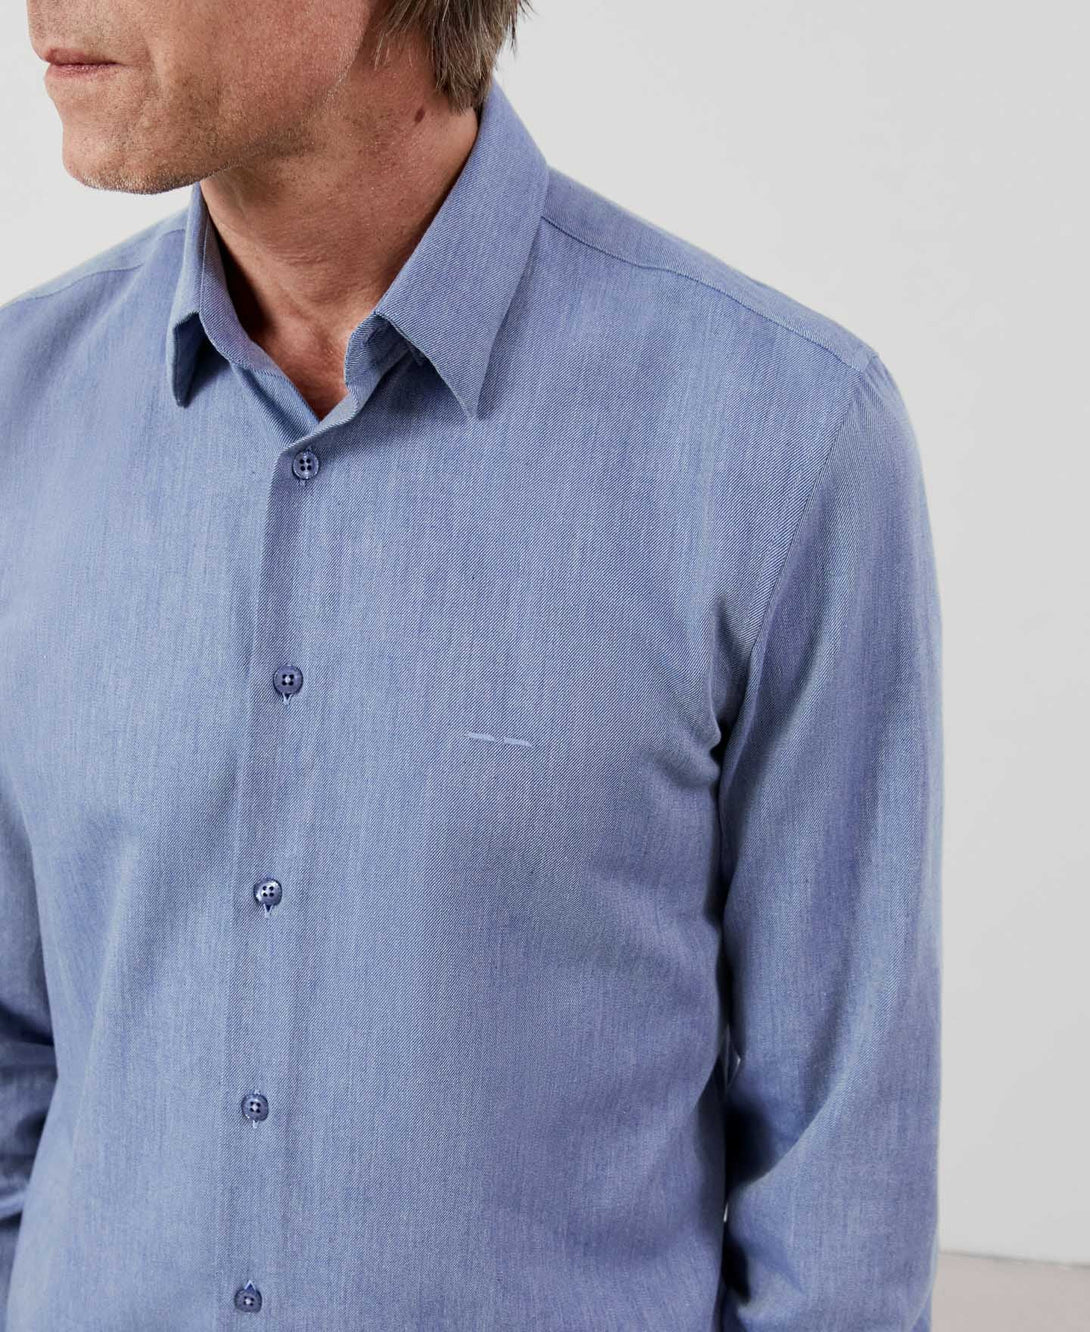 Men Shirt | Blue Melange Shirt by Spanish designer Adolfo Dominguez